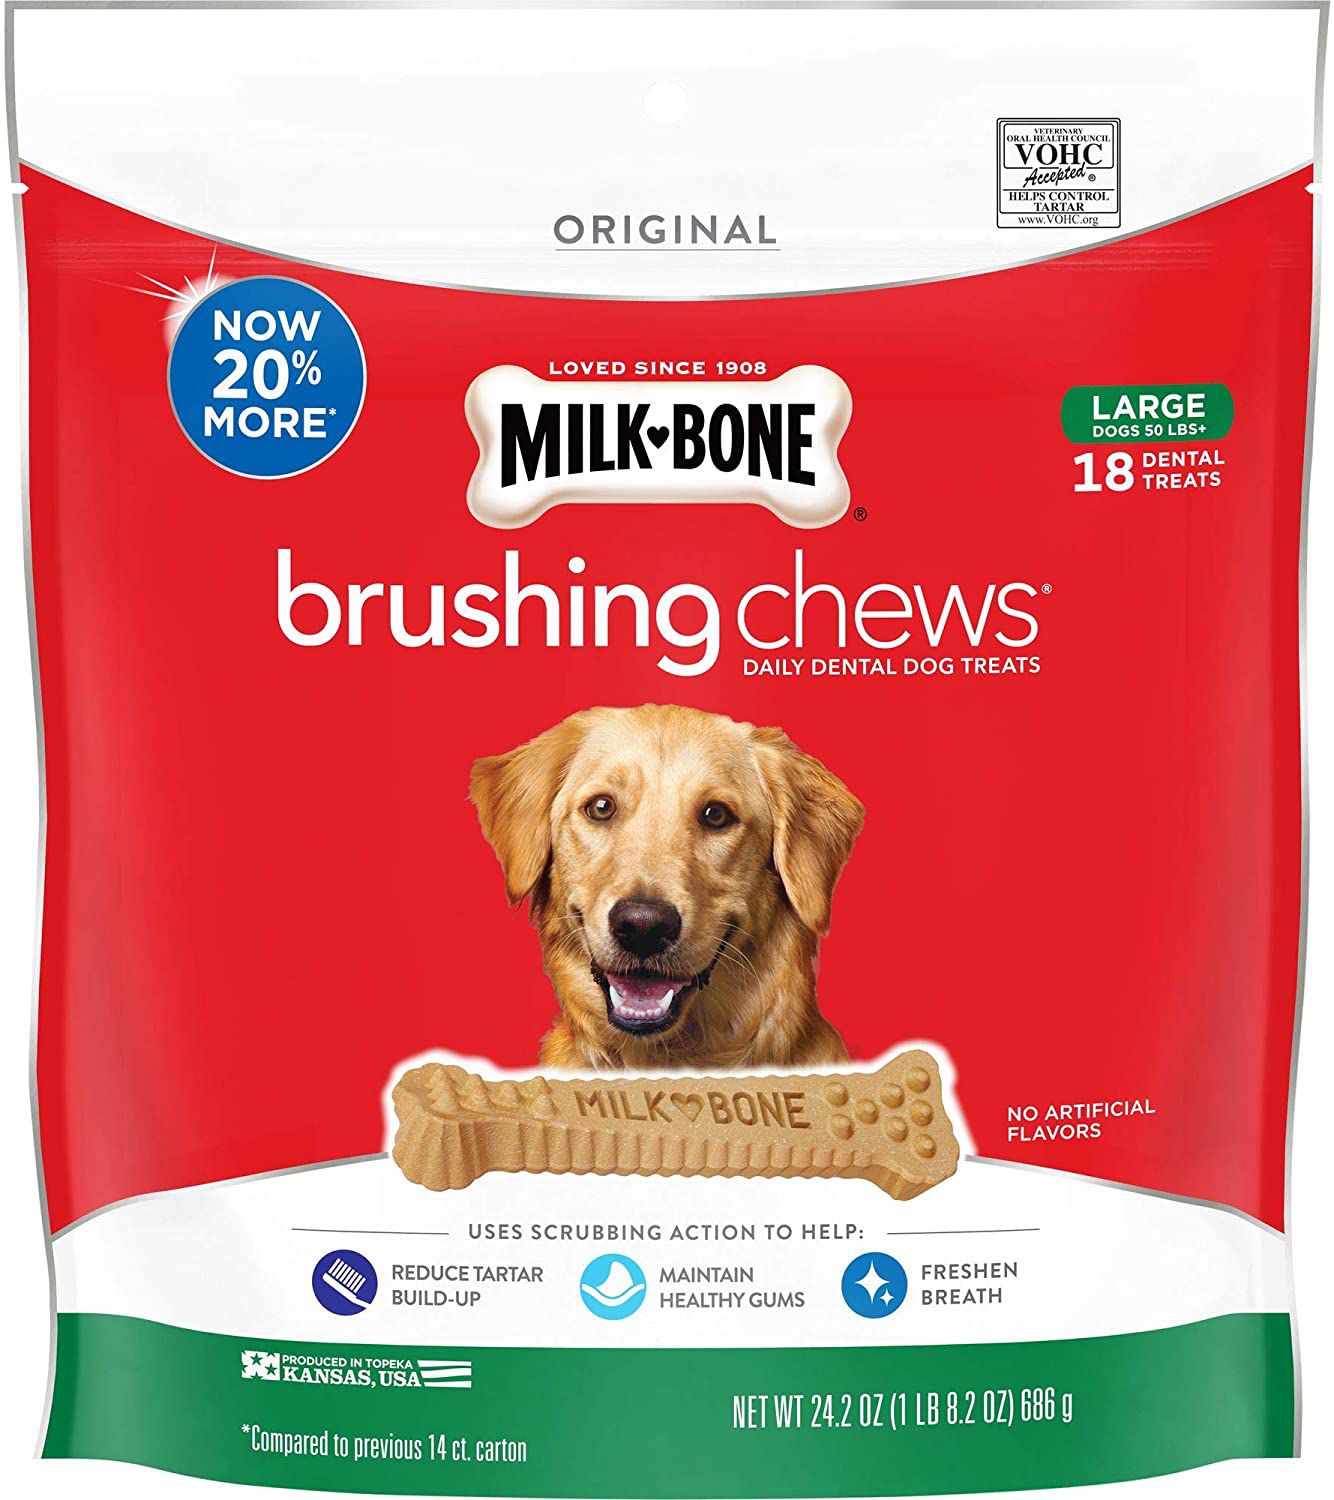 Milk-Bone Original Brushing Chews Daily Dental Dog Treats Animals & Pet Supplies > Pet Supplies > Dog Supplies > Dog Treats Milk-Bone Red Large 18 Count (Pack of 1)